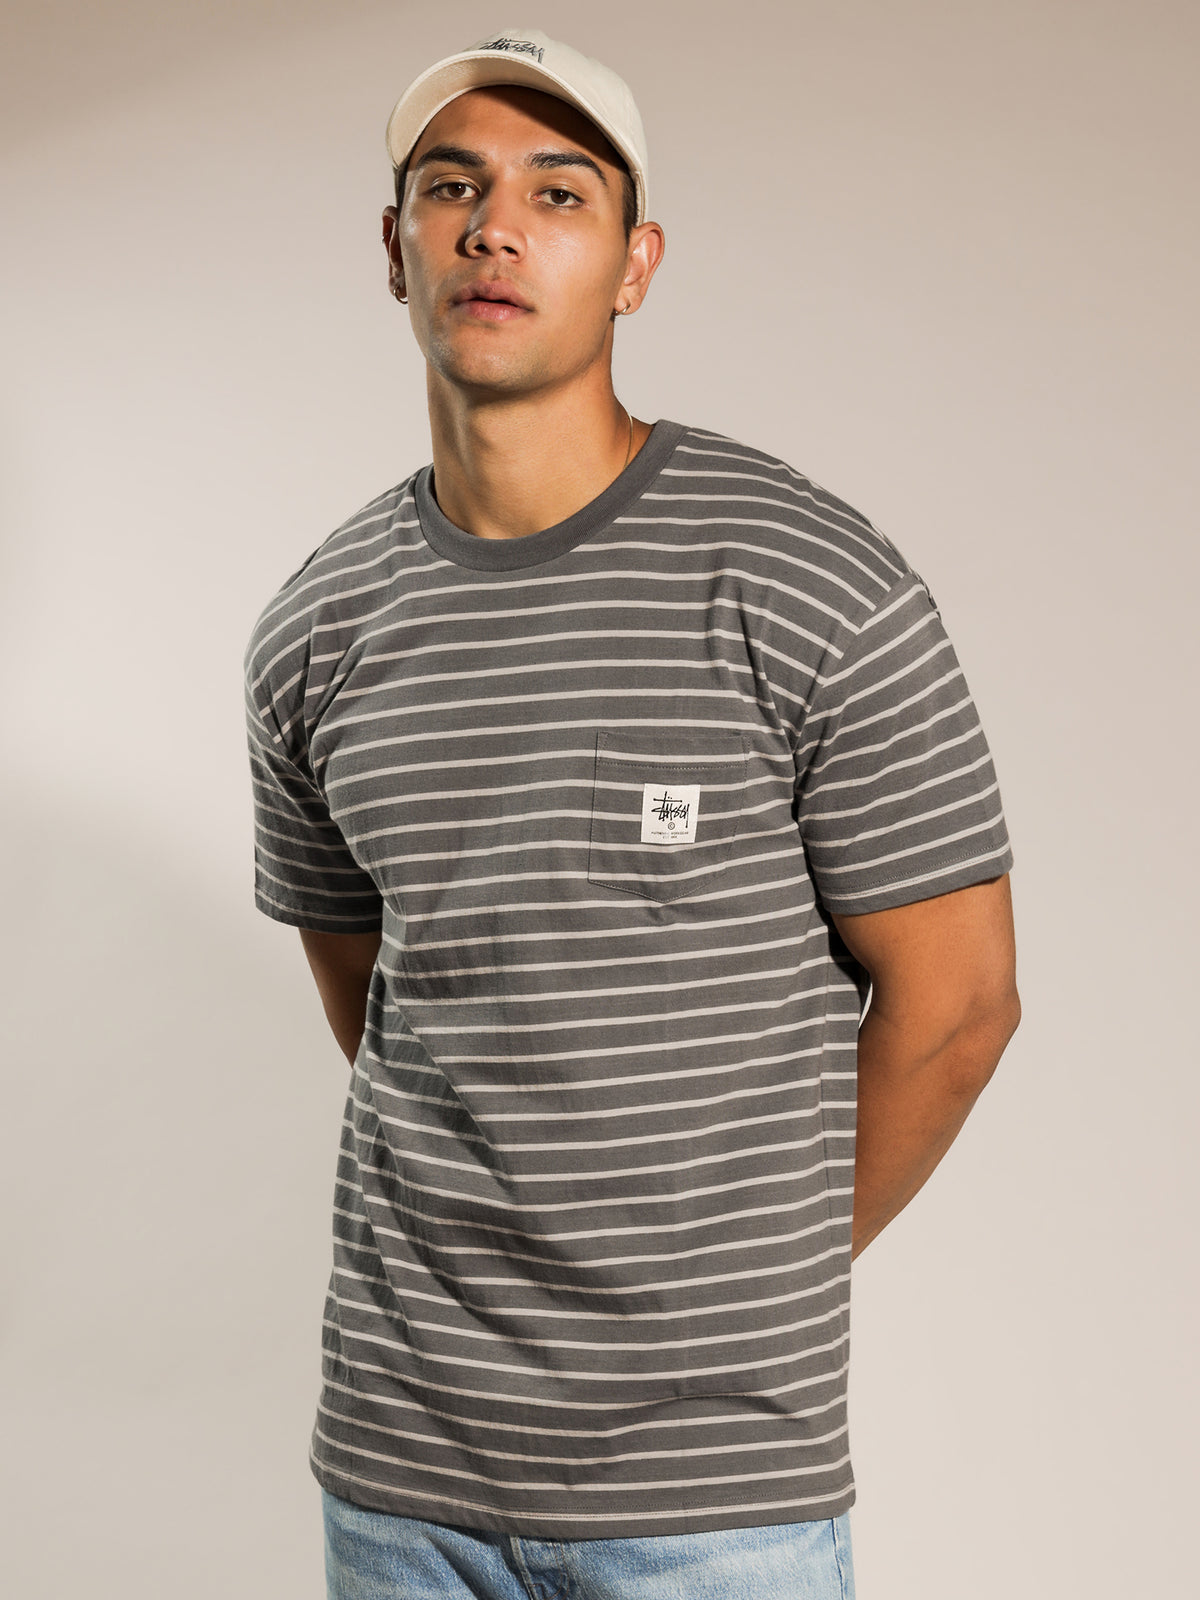 Kalorama Stripe T-Shirt in Grey